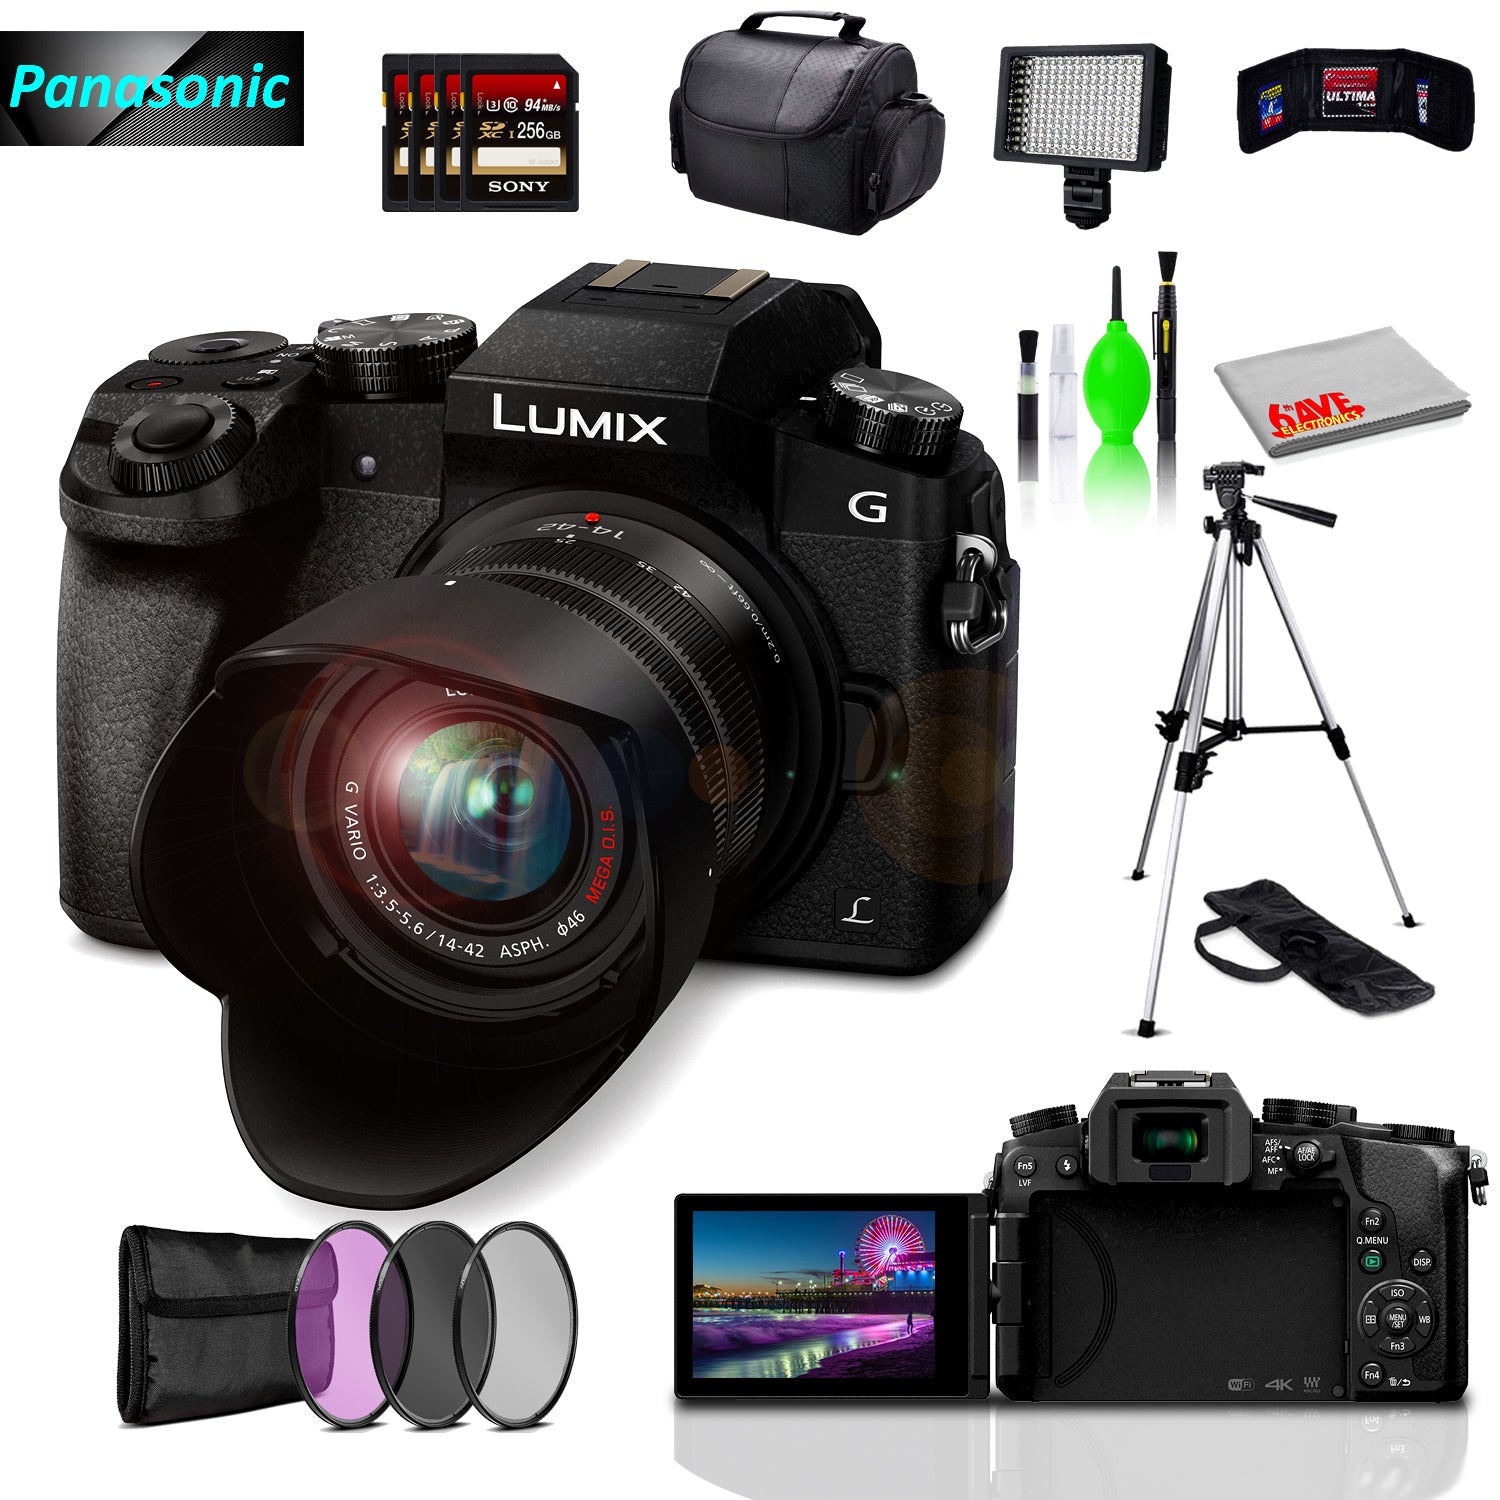 Panasonic Lumix DMC-G7 Mirrorless MFT Digital Camera, 4x 256GB SD Card & Cleaning Kit